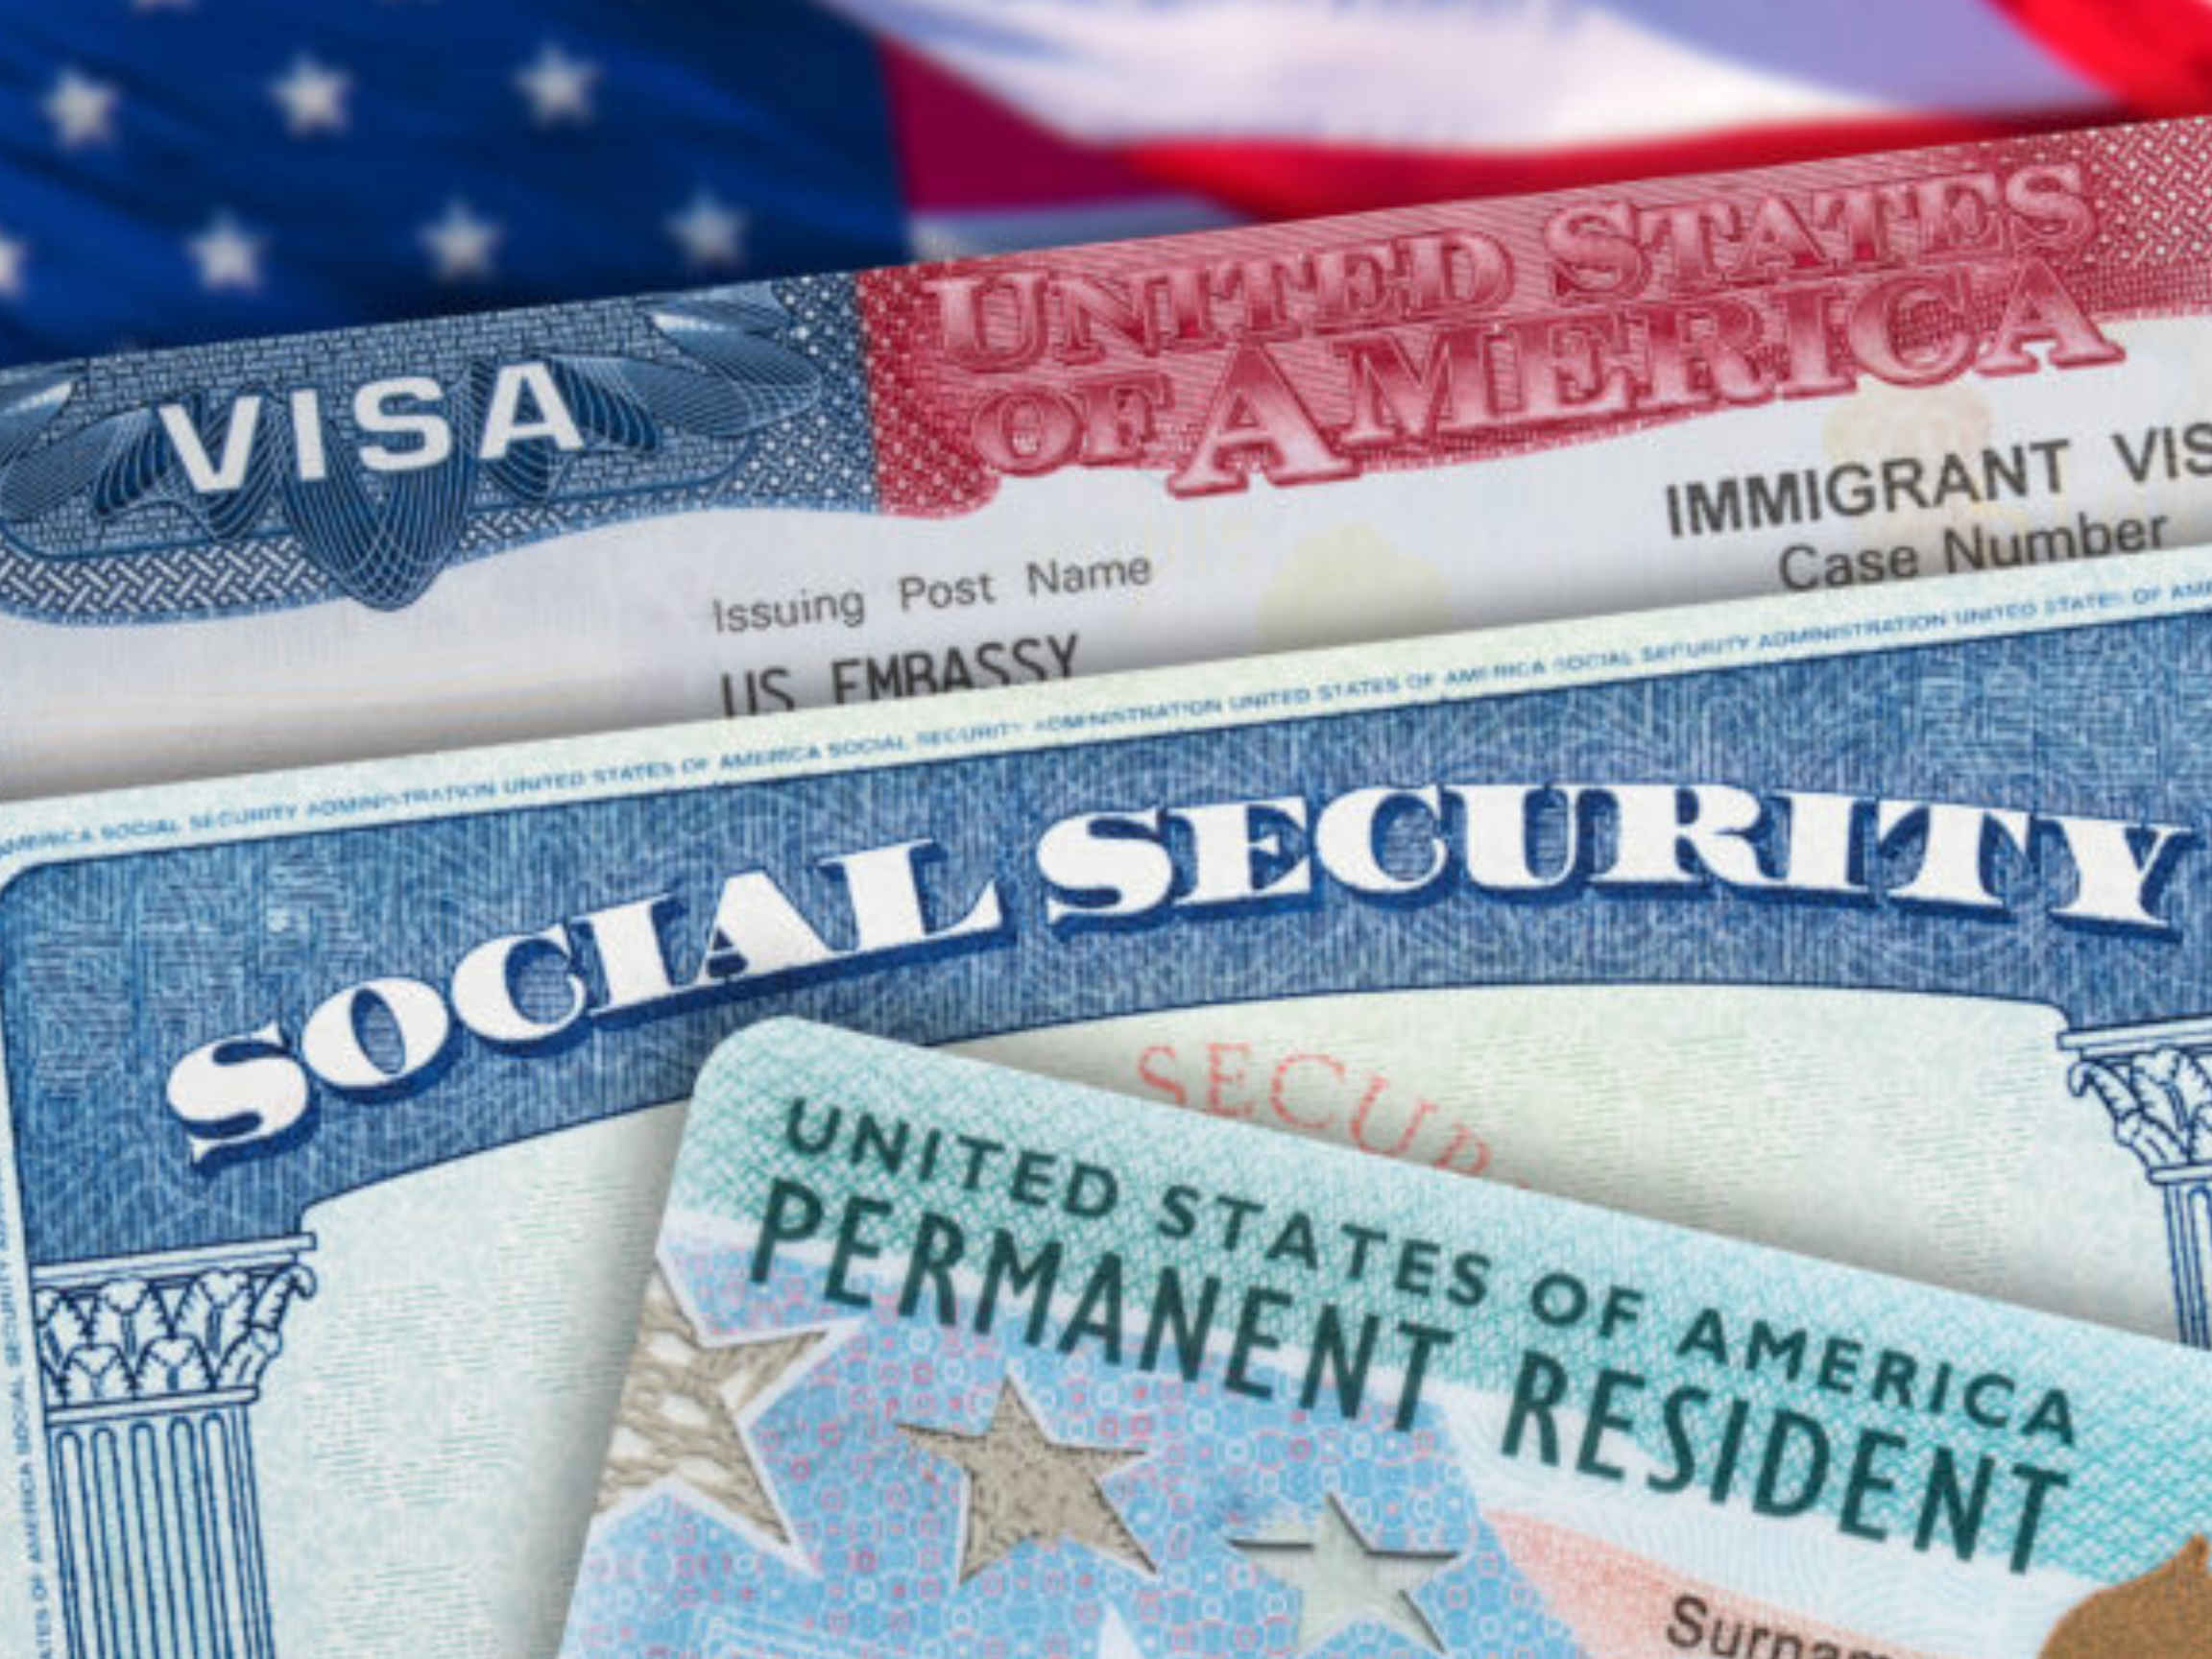 DV-2024 Program - Instructions For Green Card Through the Diversity Immigrant Visa Program